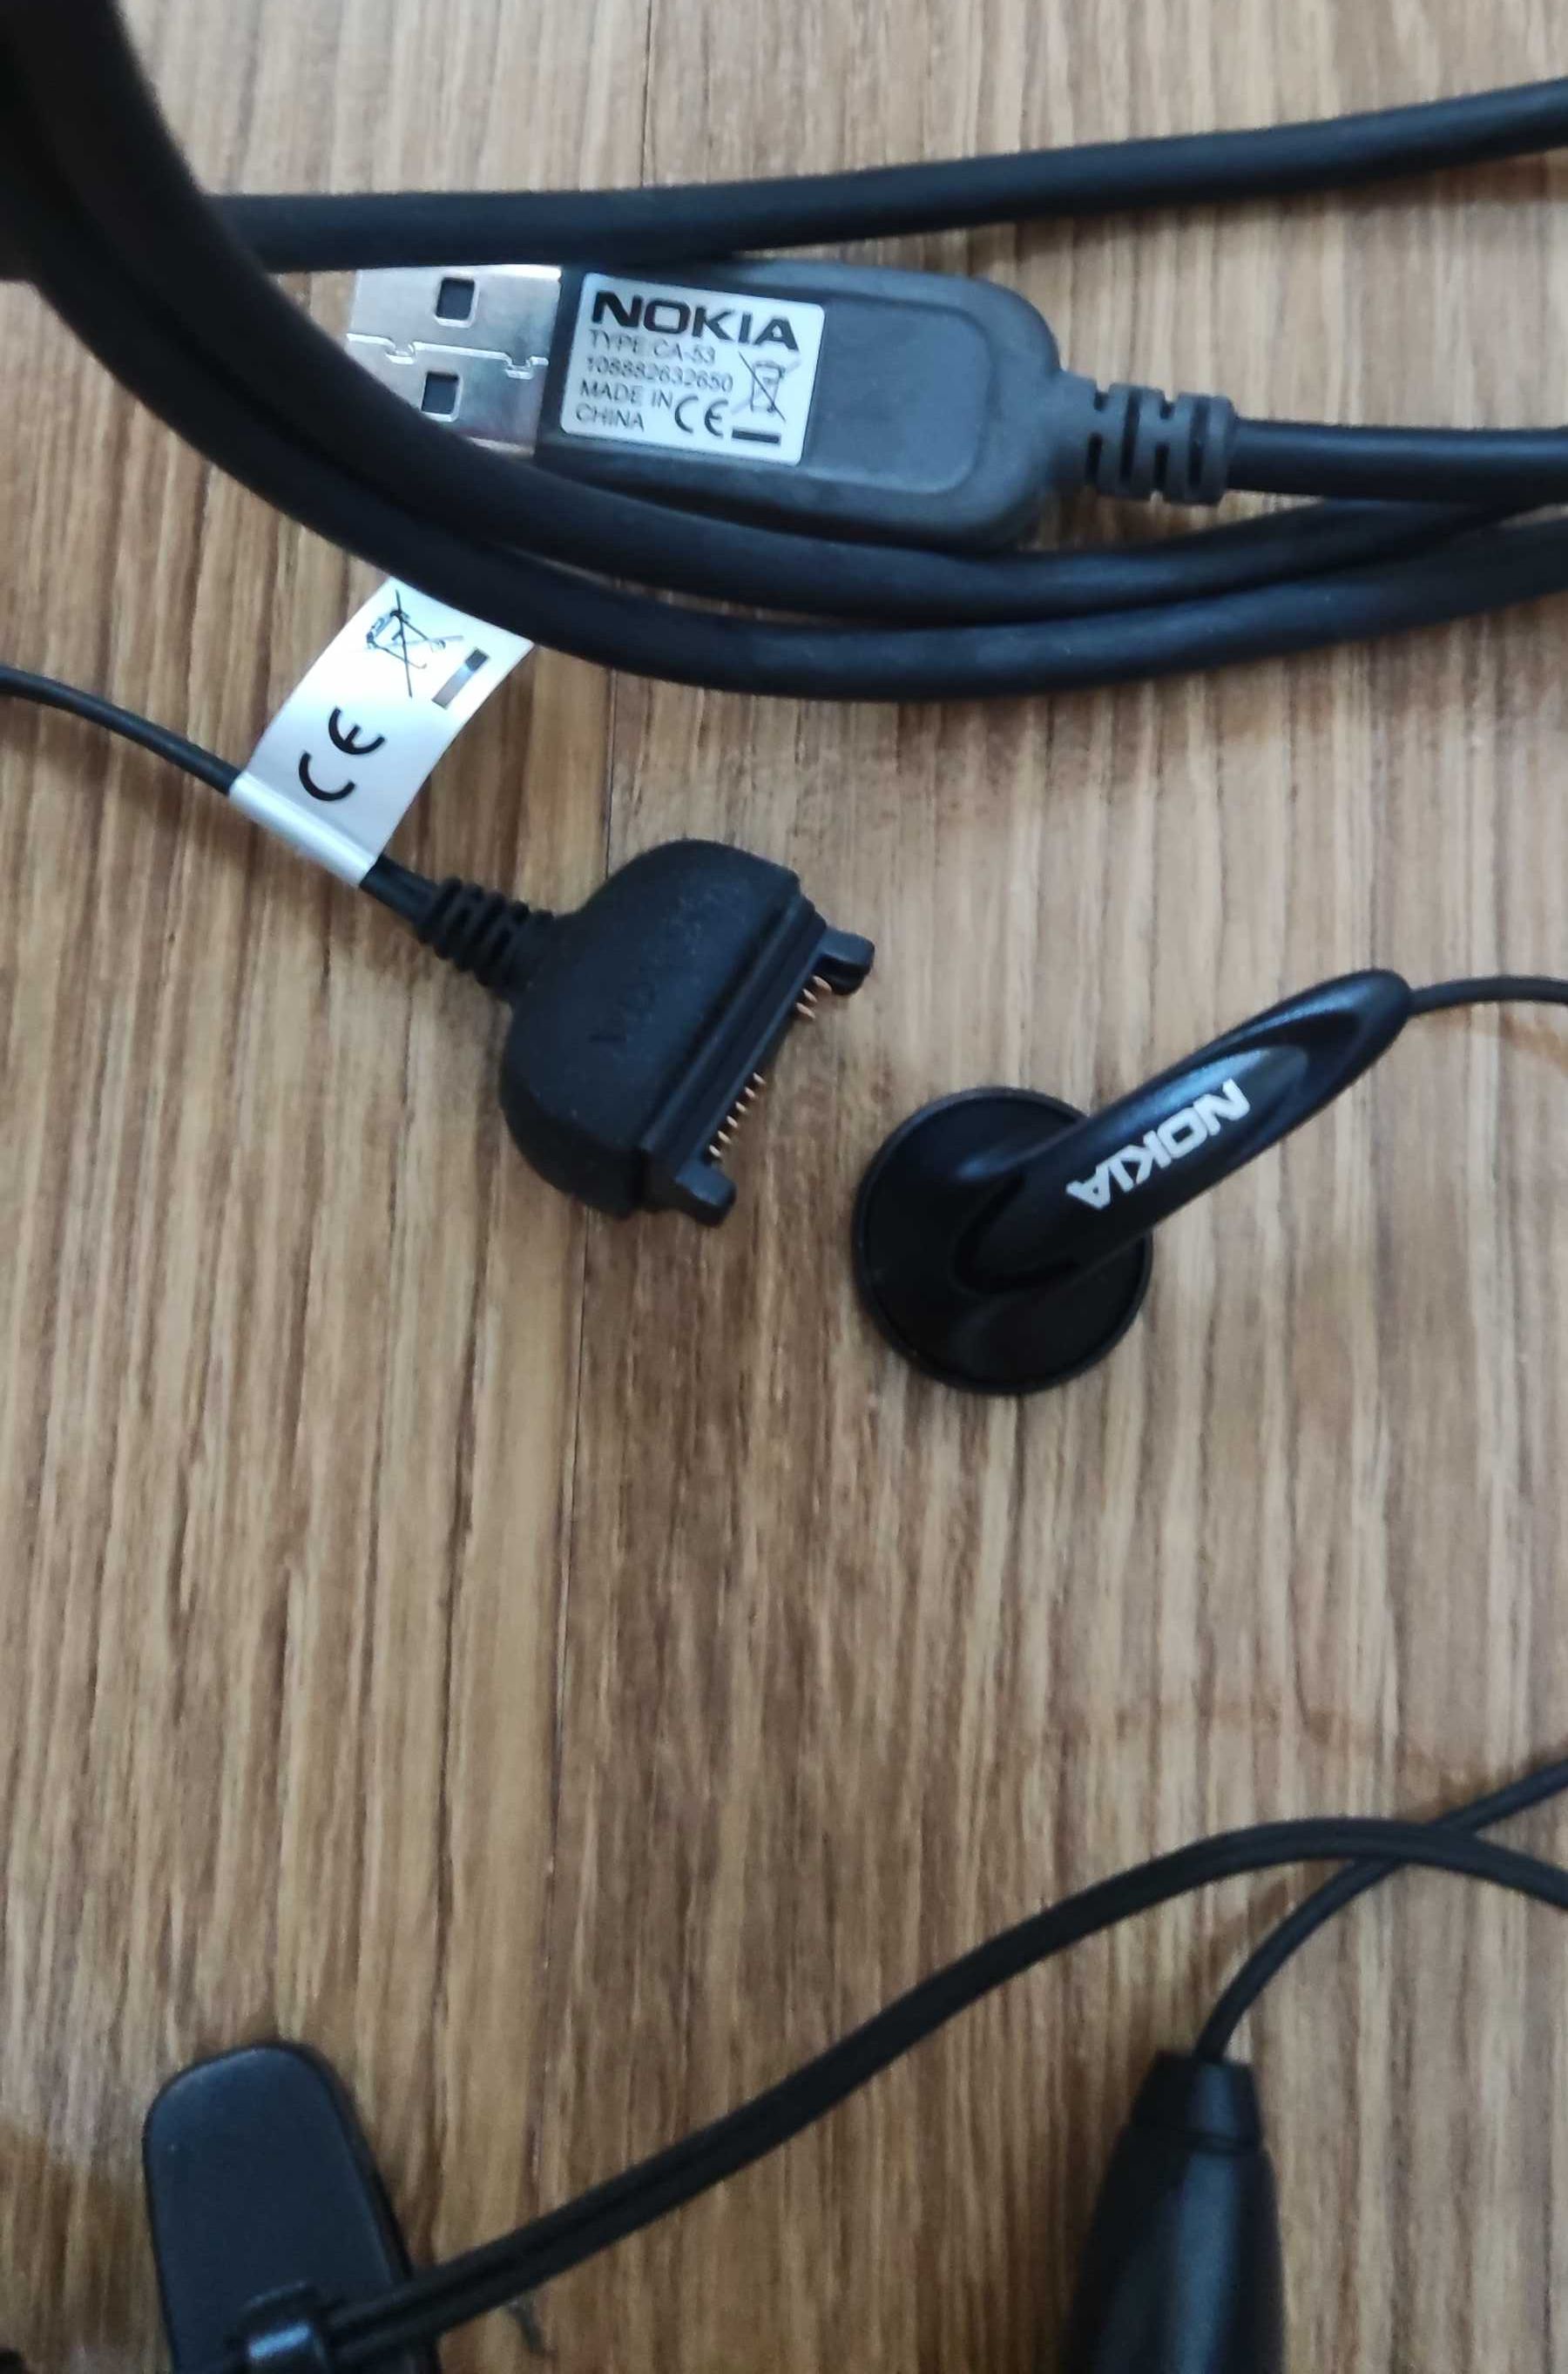 Nokia Гарнитура и USB кабель